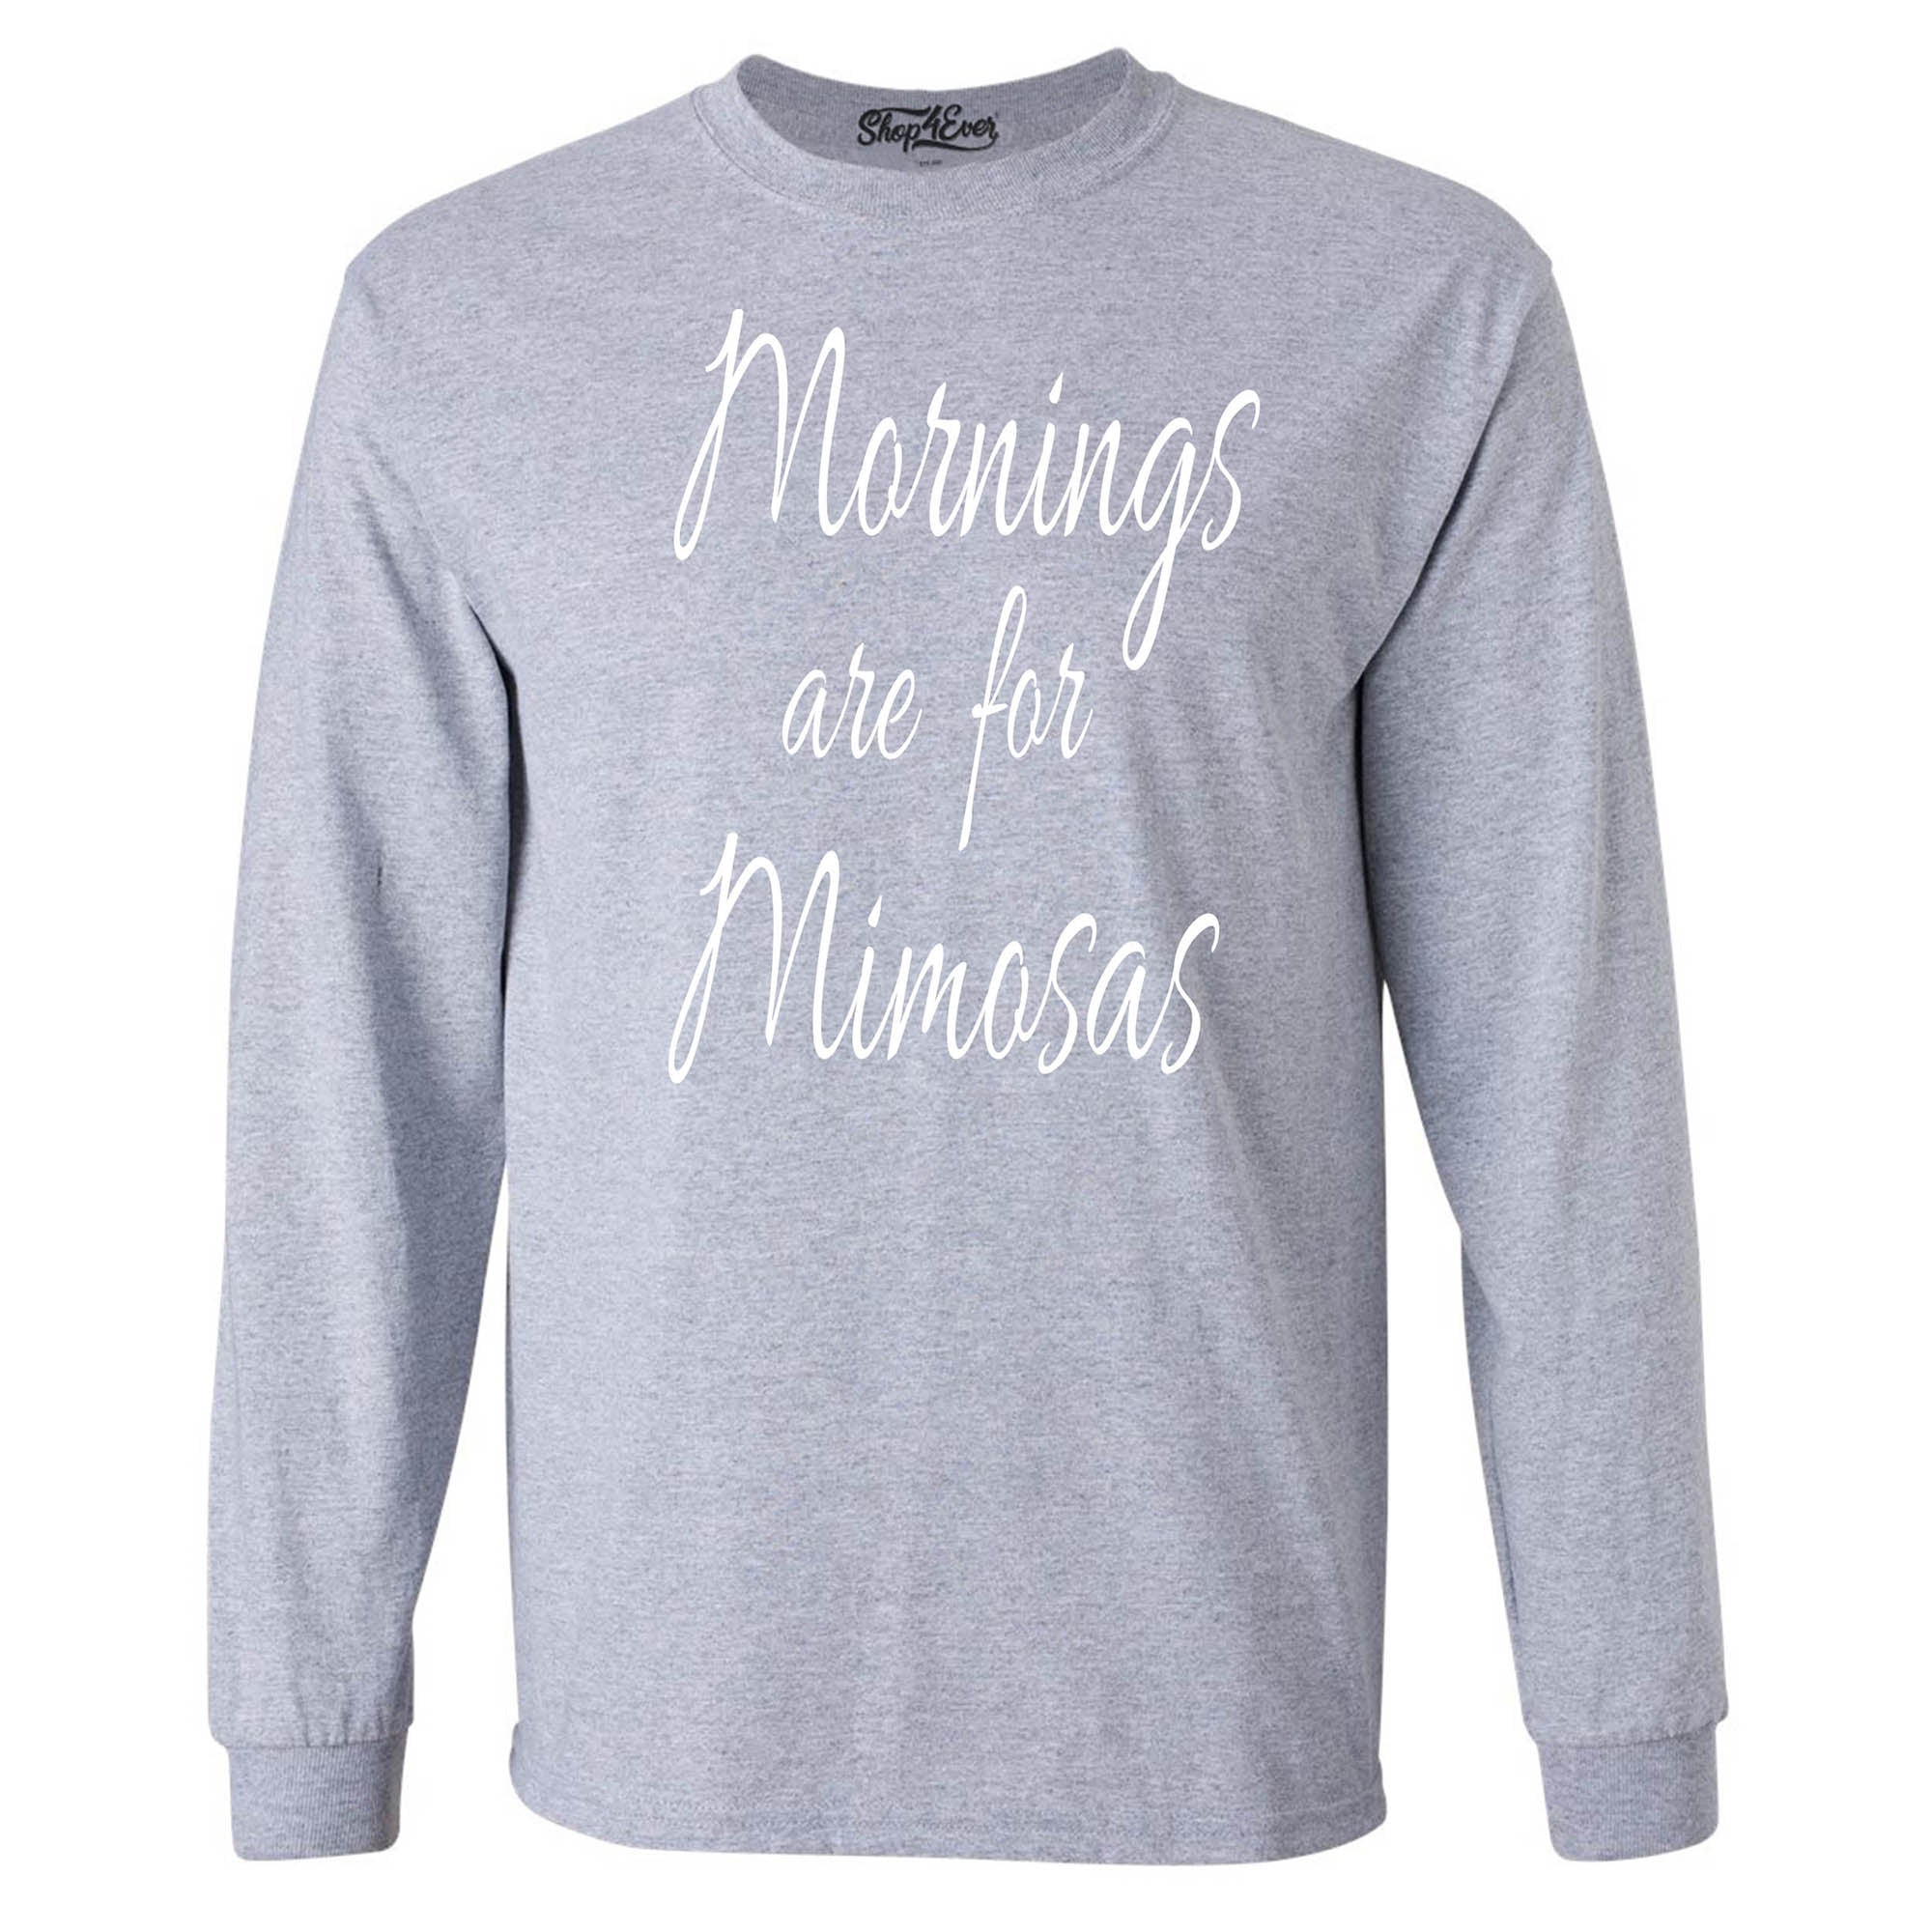 Mornings are for Mimosas Long Sleeve Shirt Sayings Shirts